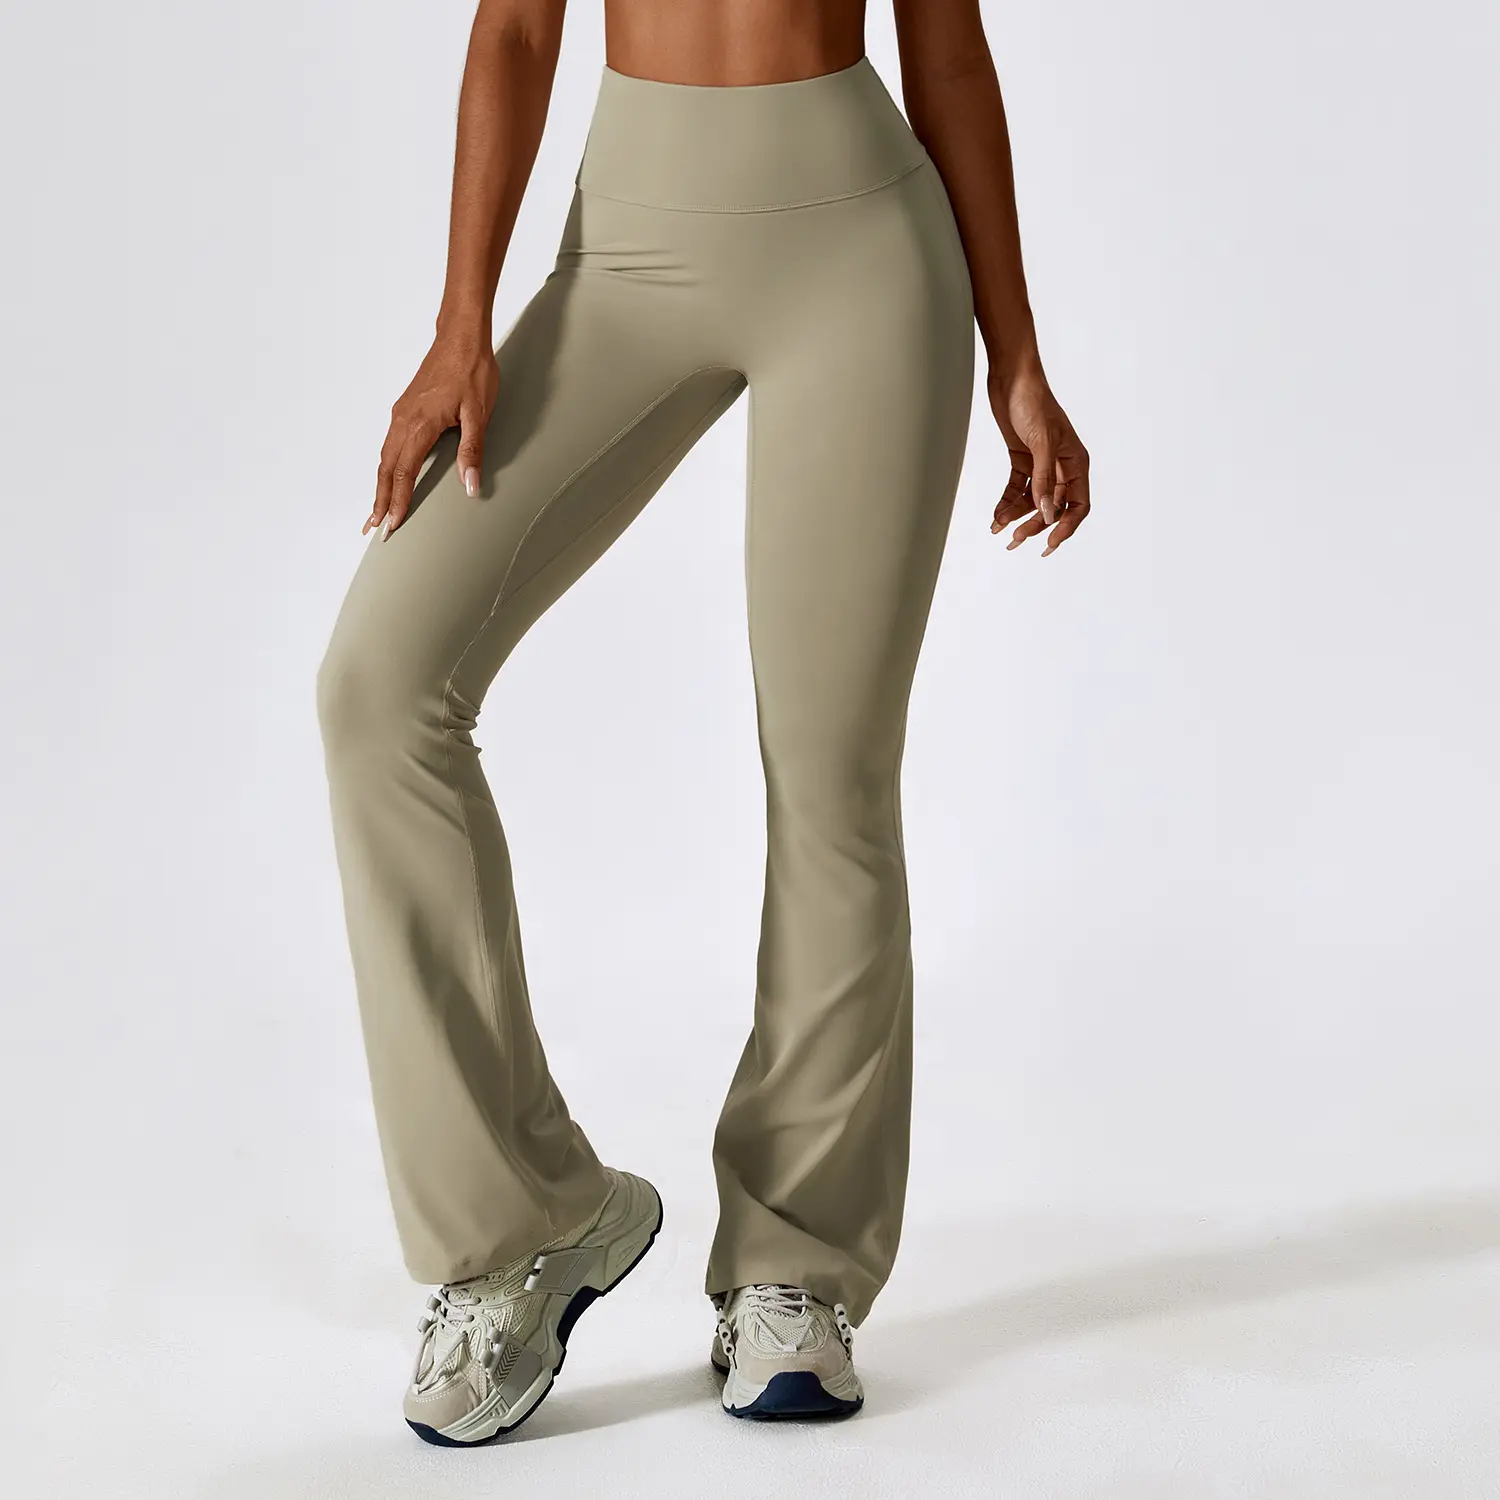 Individuelles Logo solide Farbe Gesäßstraffung hohe Taille Yoga-Hose Premium-Sport nahtlose Fitness-Yoga-Leggings für Damen